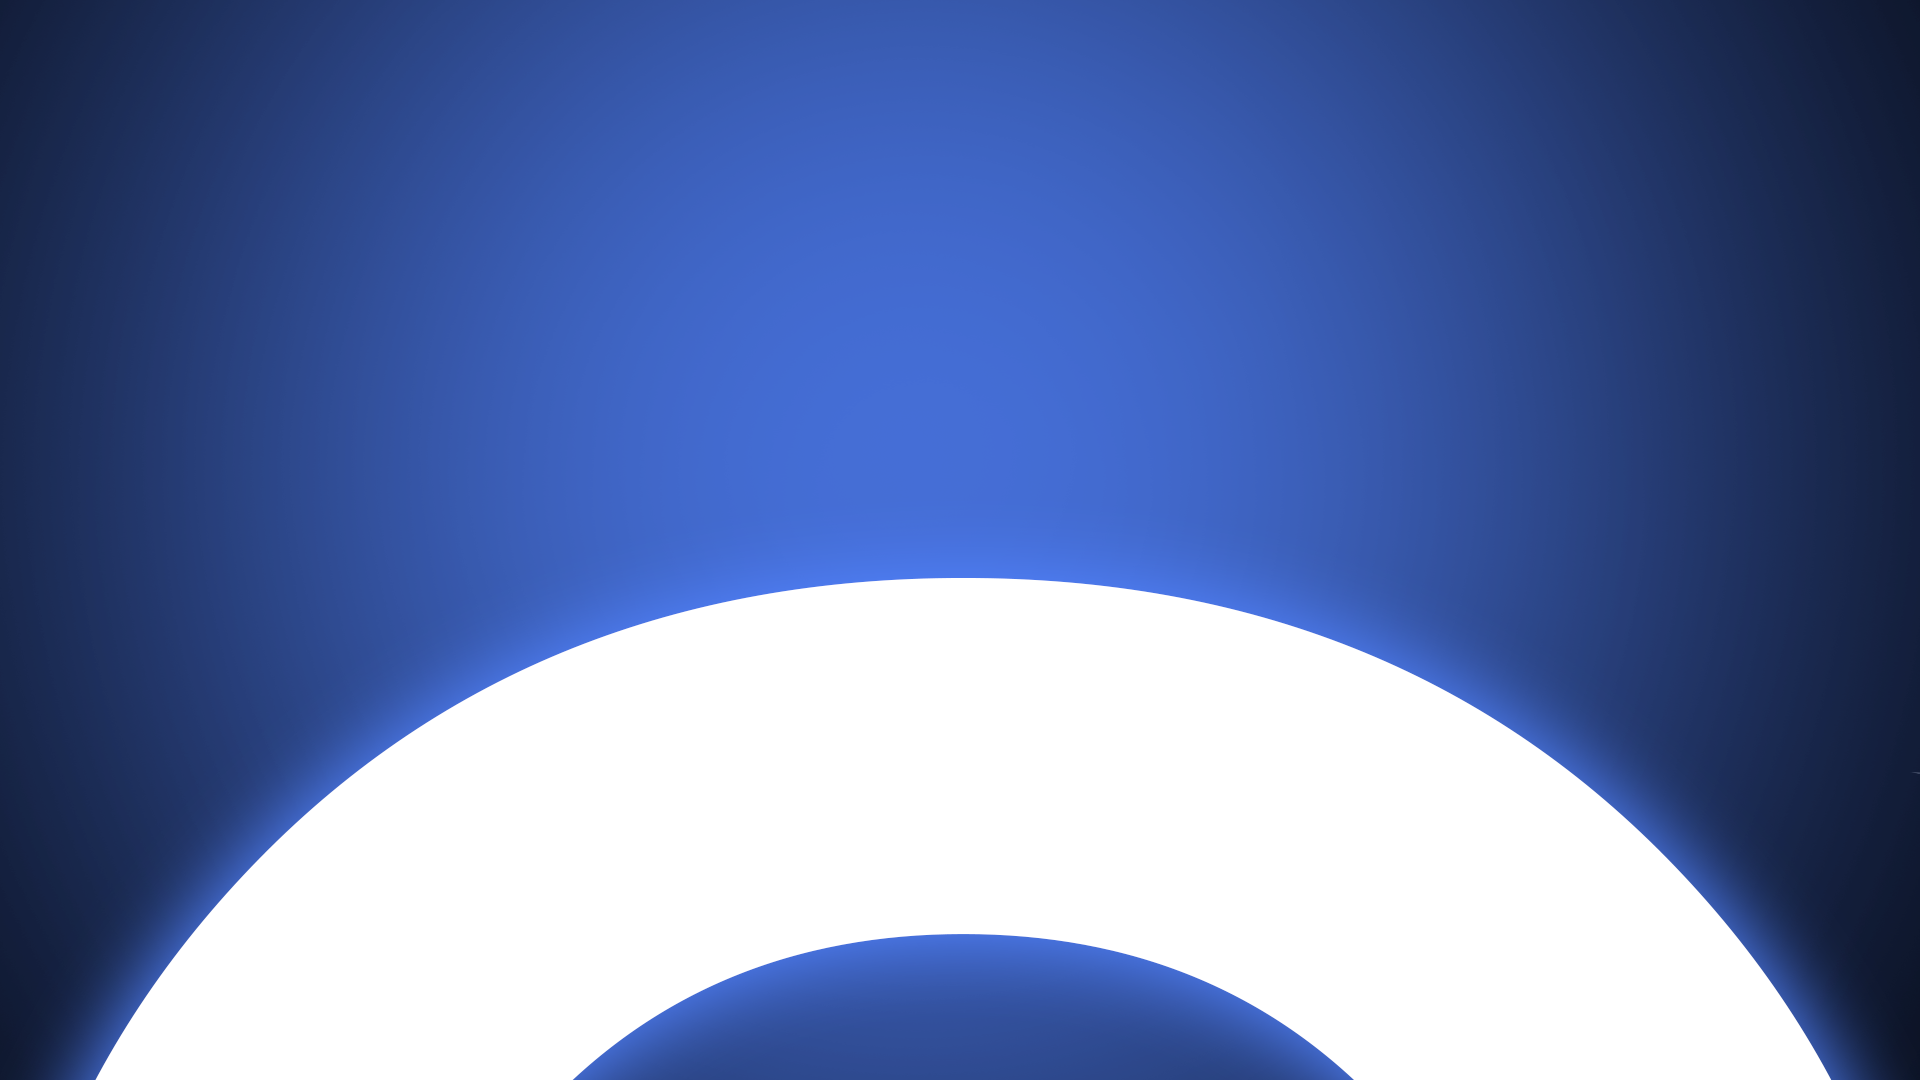 General 1920x1080 Onih Inc blue white minimalism circle blue background